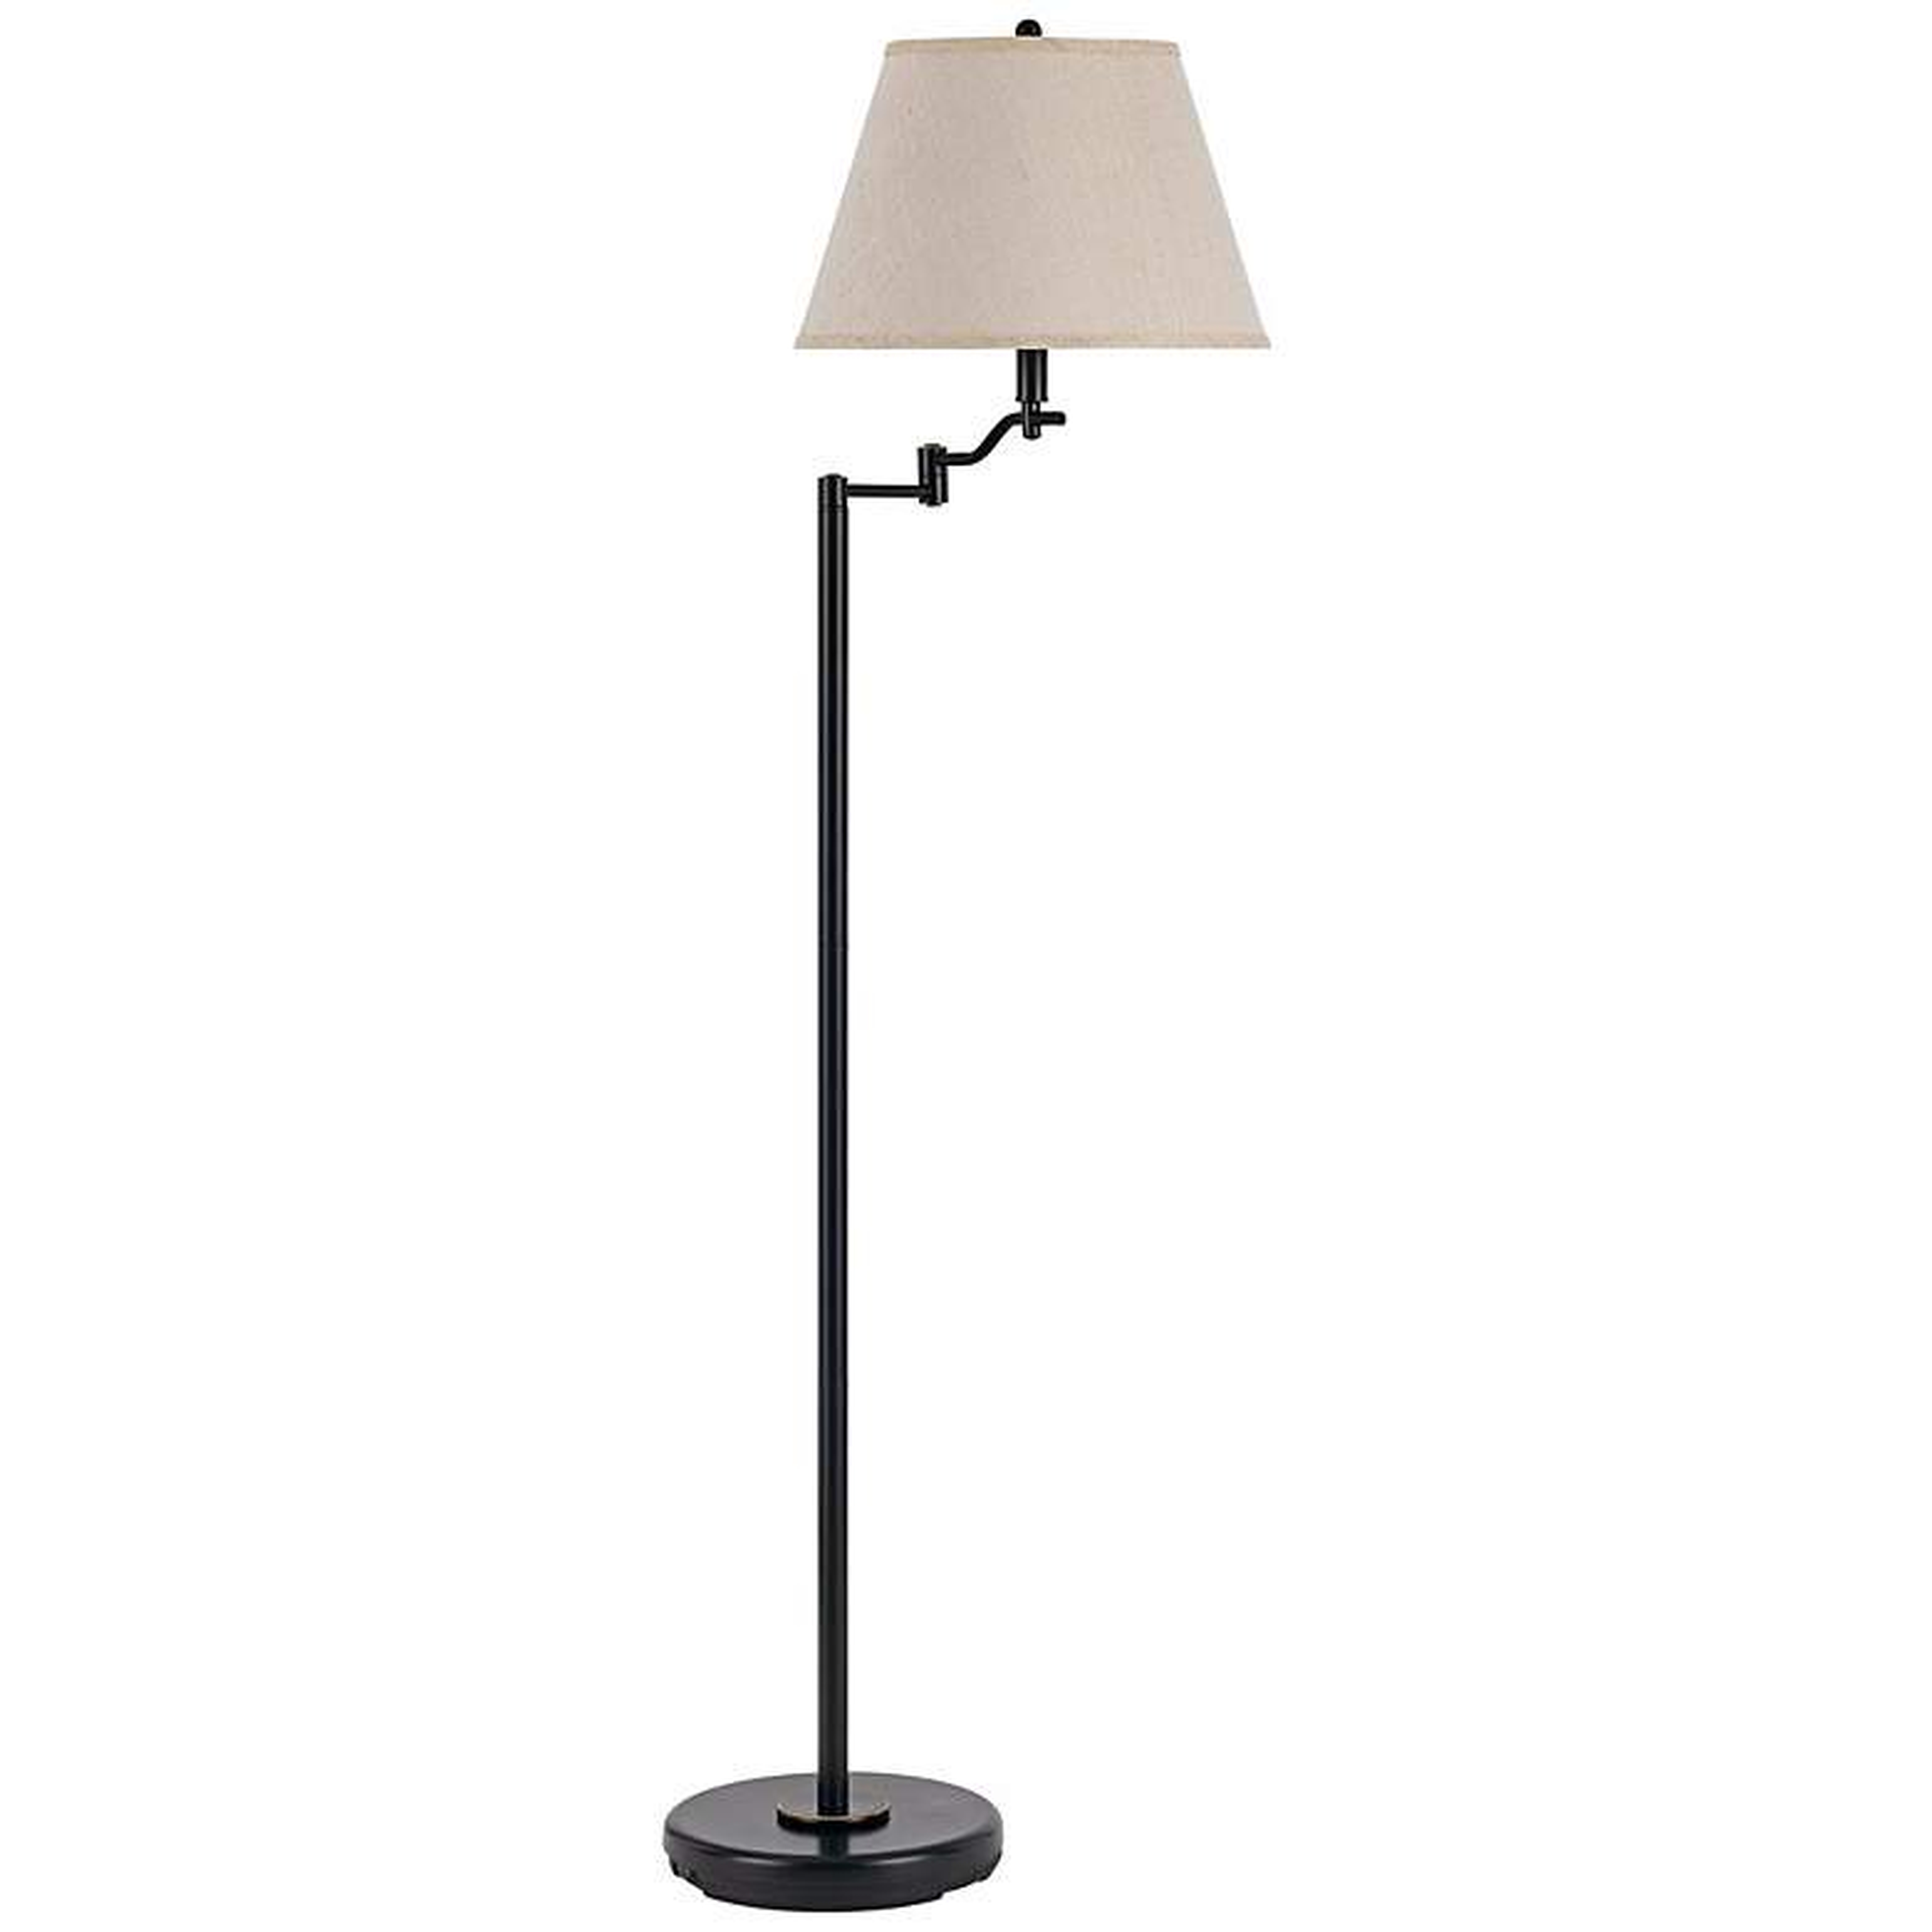 Stila Swing Arm Floor Lamp, Dark Bronze - Lamps Plus